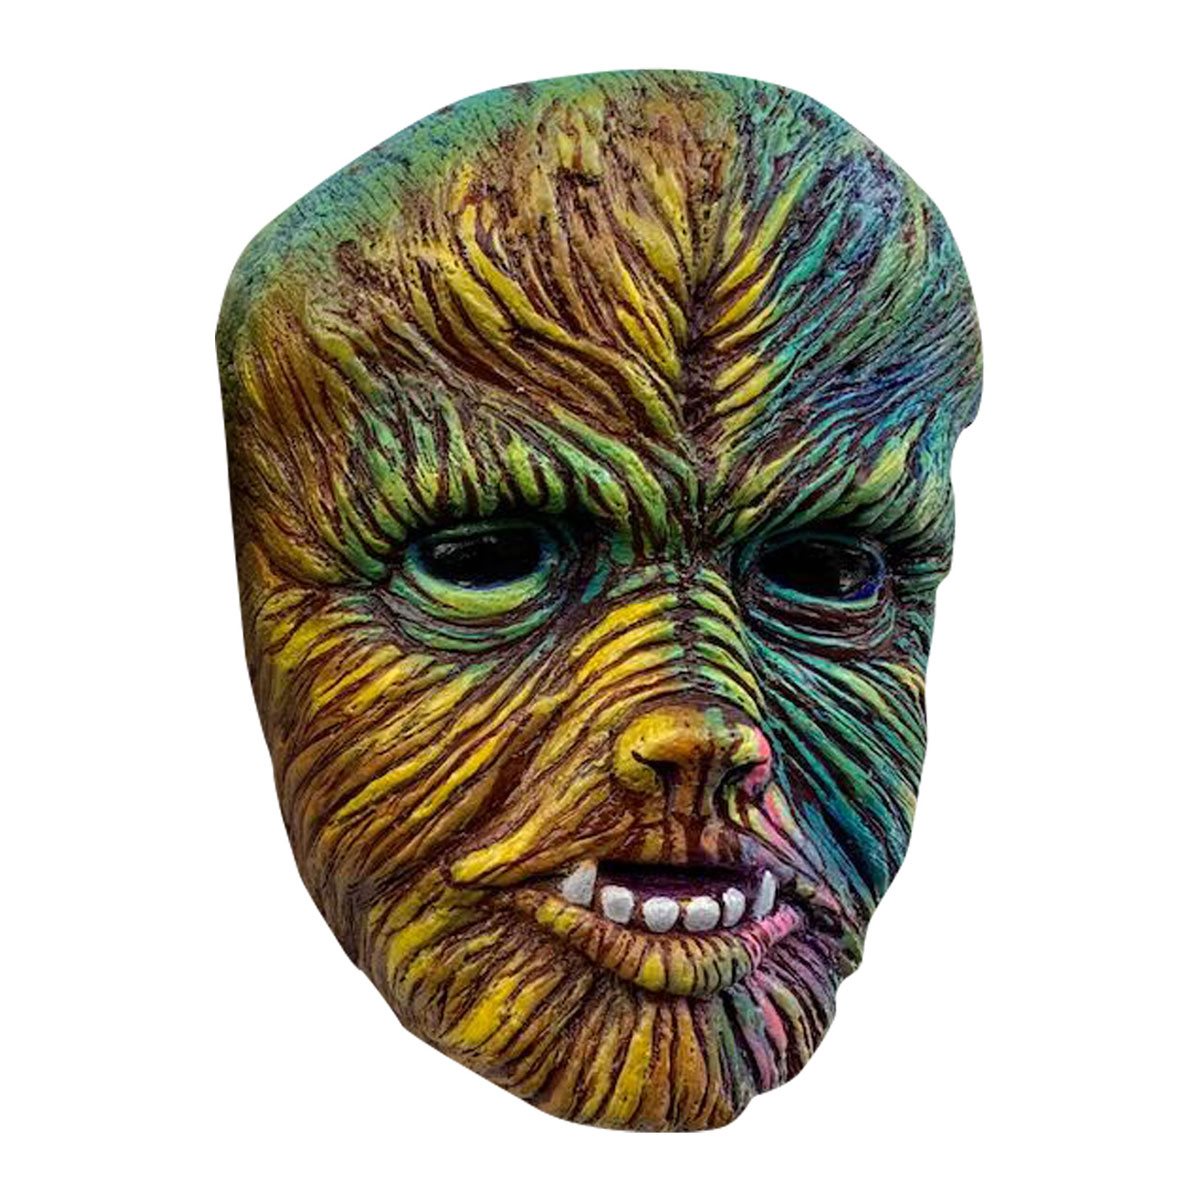 PRE-ORDER Universal Monsters Wolf Man Basil Gogos Mini-Mask - PX